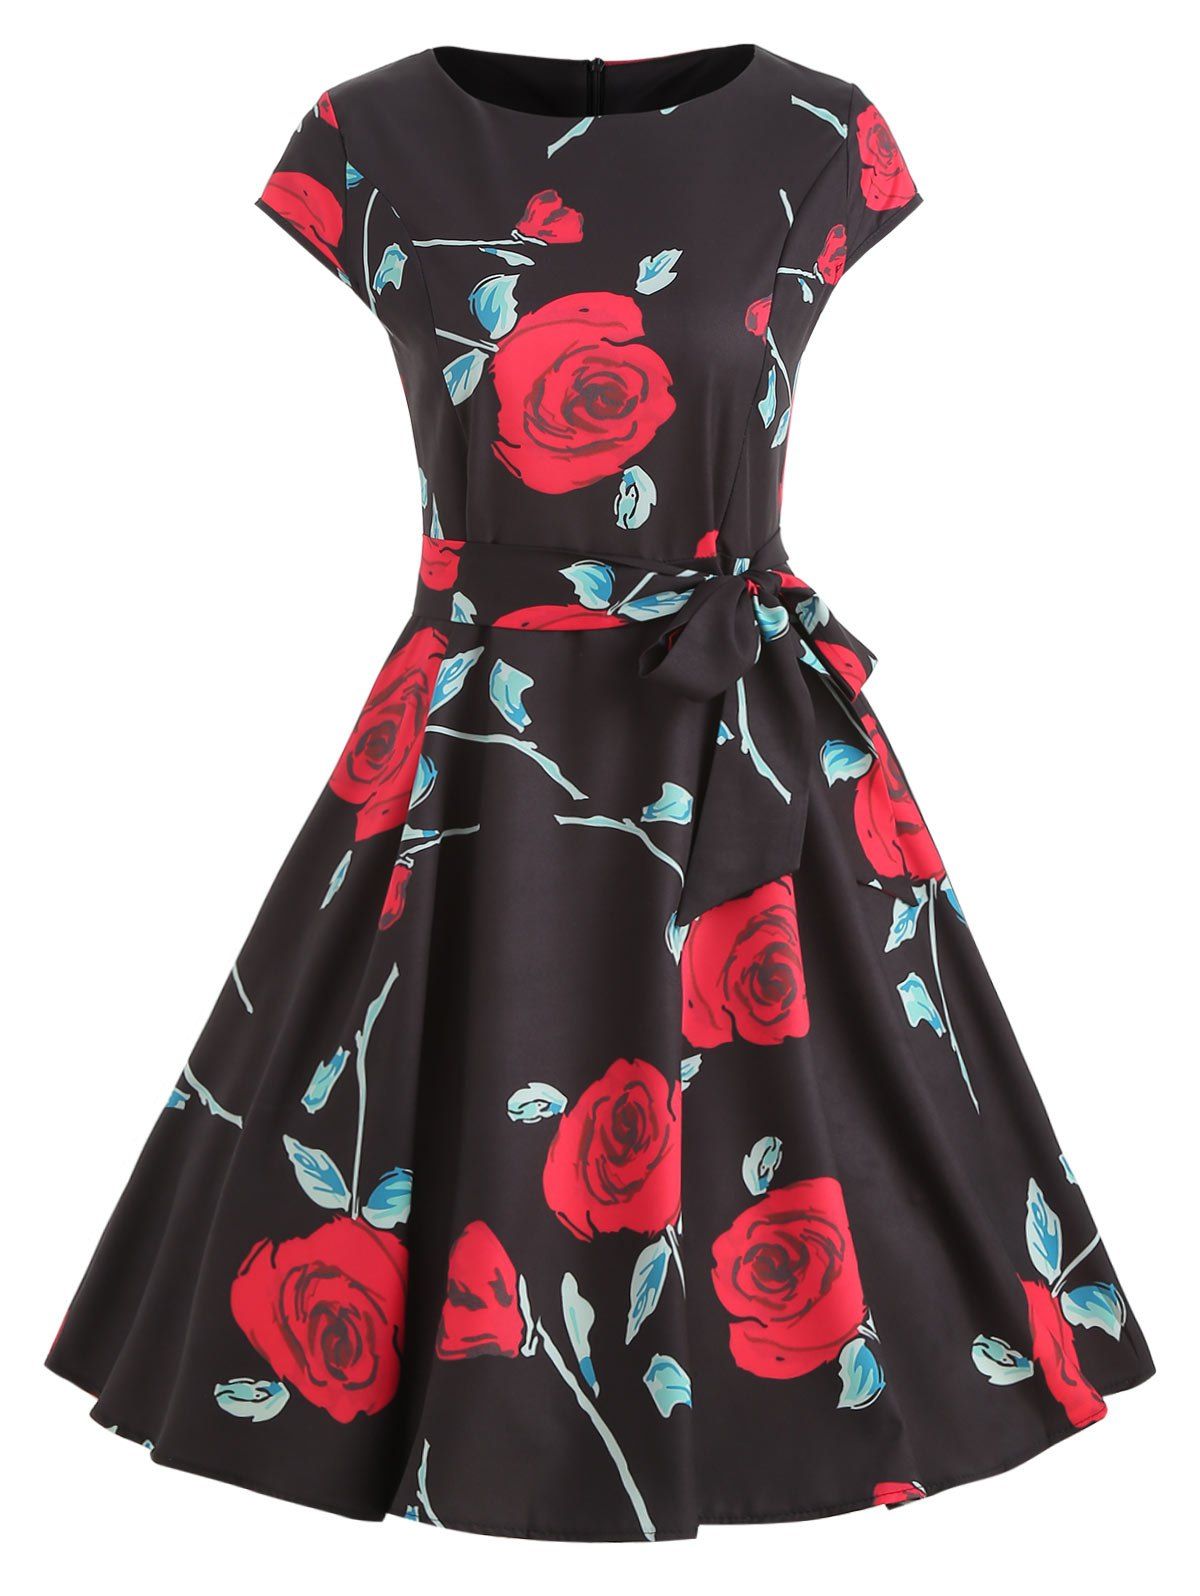 High Waist Rose Print Flare Dress - multicolor M